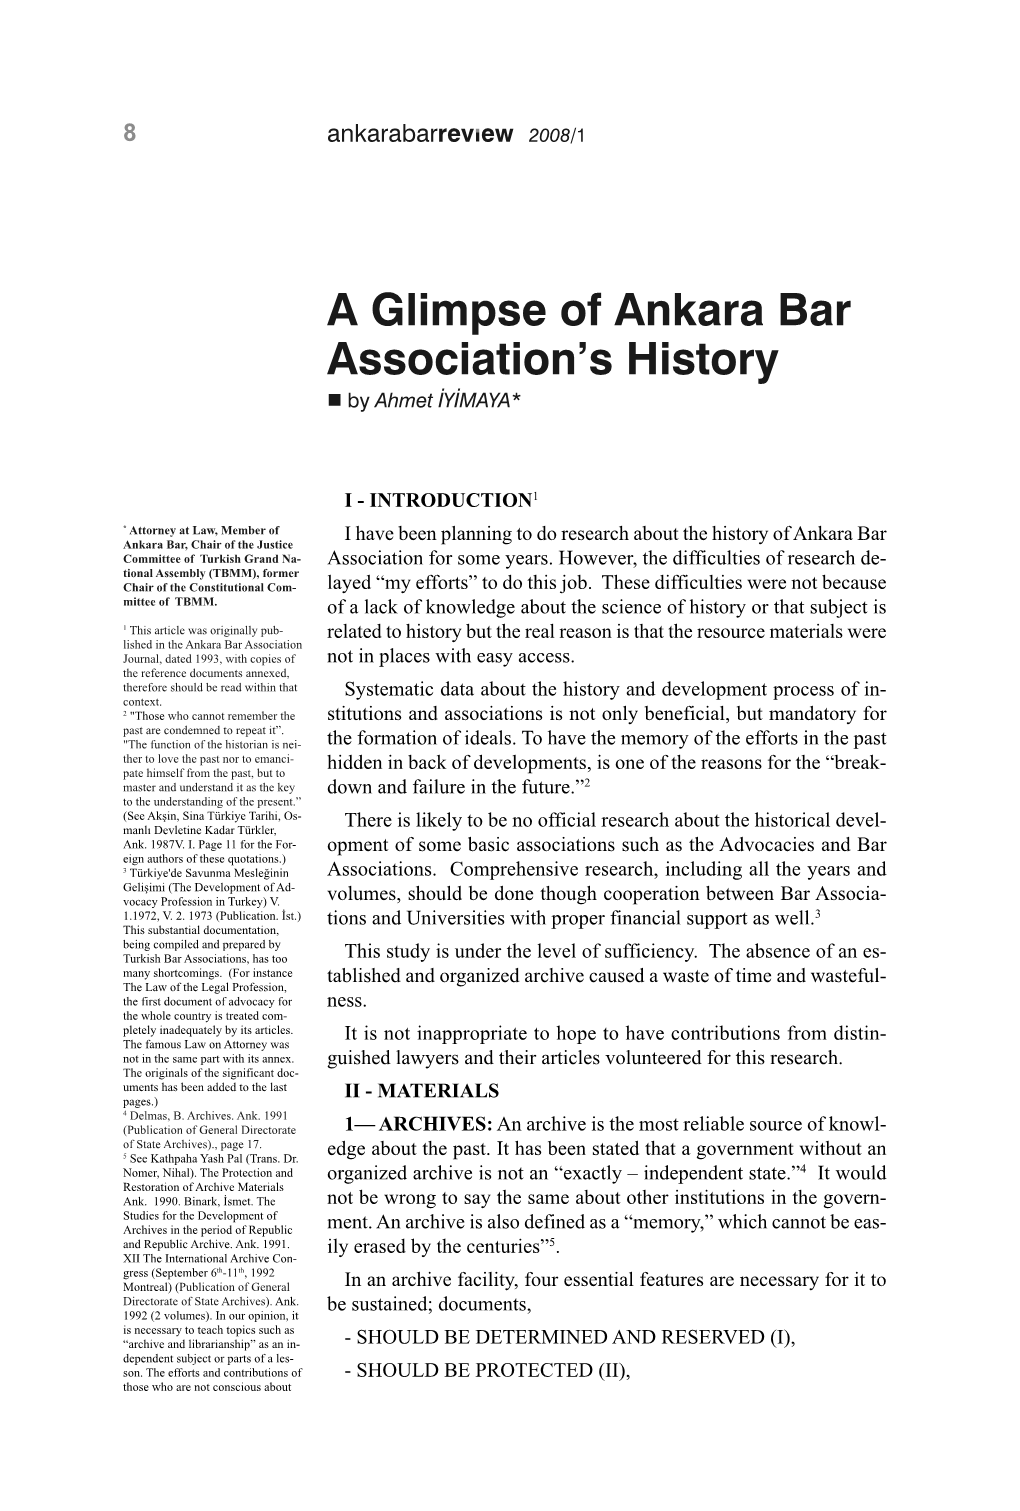 A Glimpse of Ankara Bar Association's History